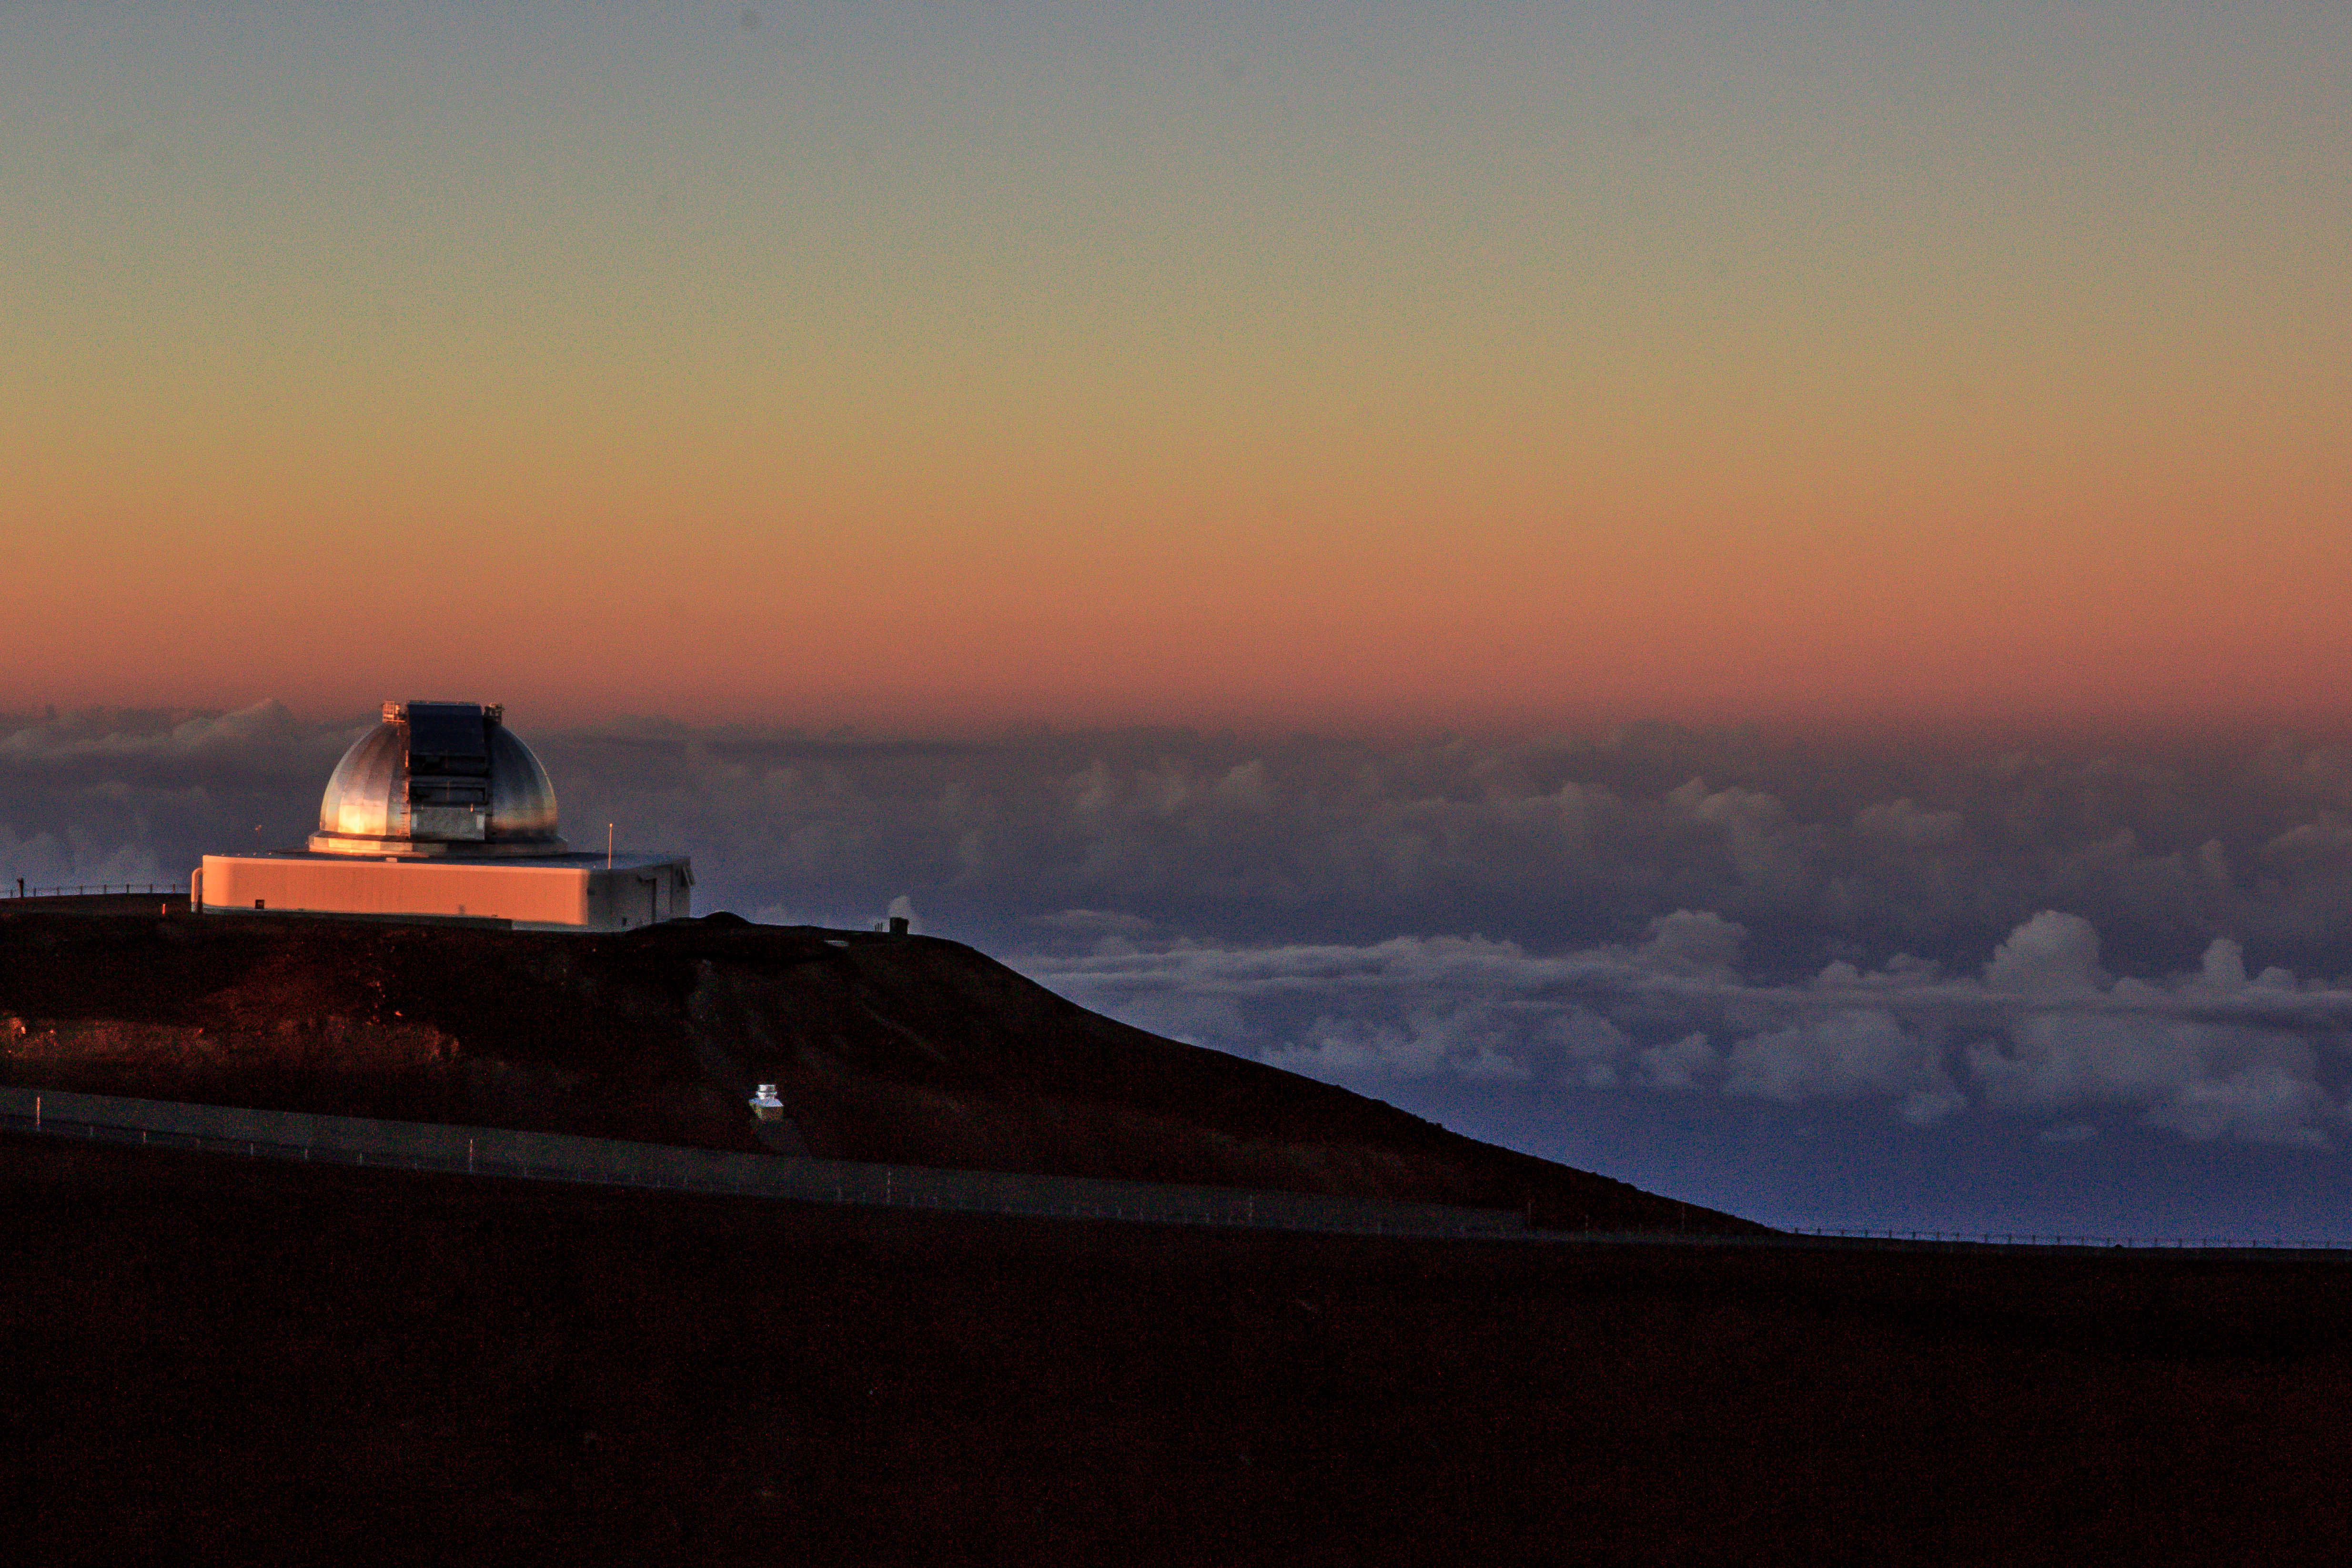 hawaii telescope project